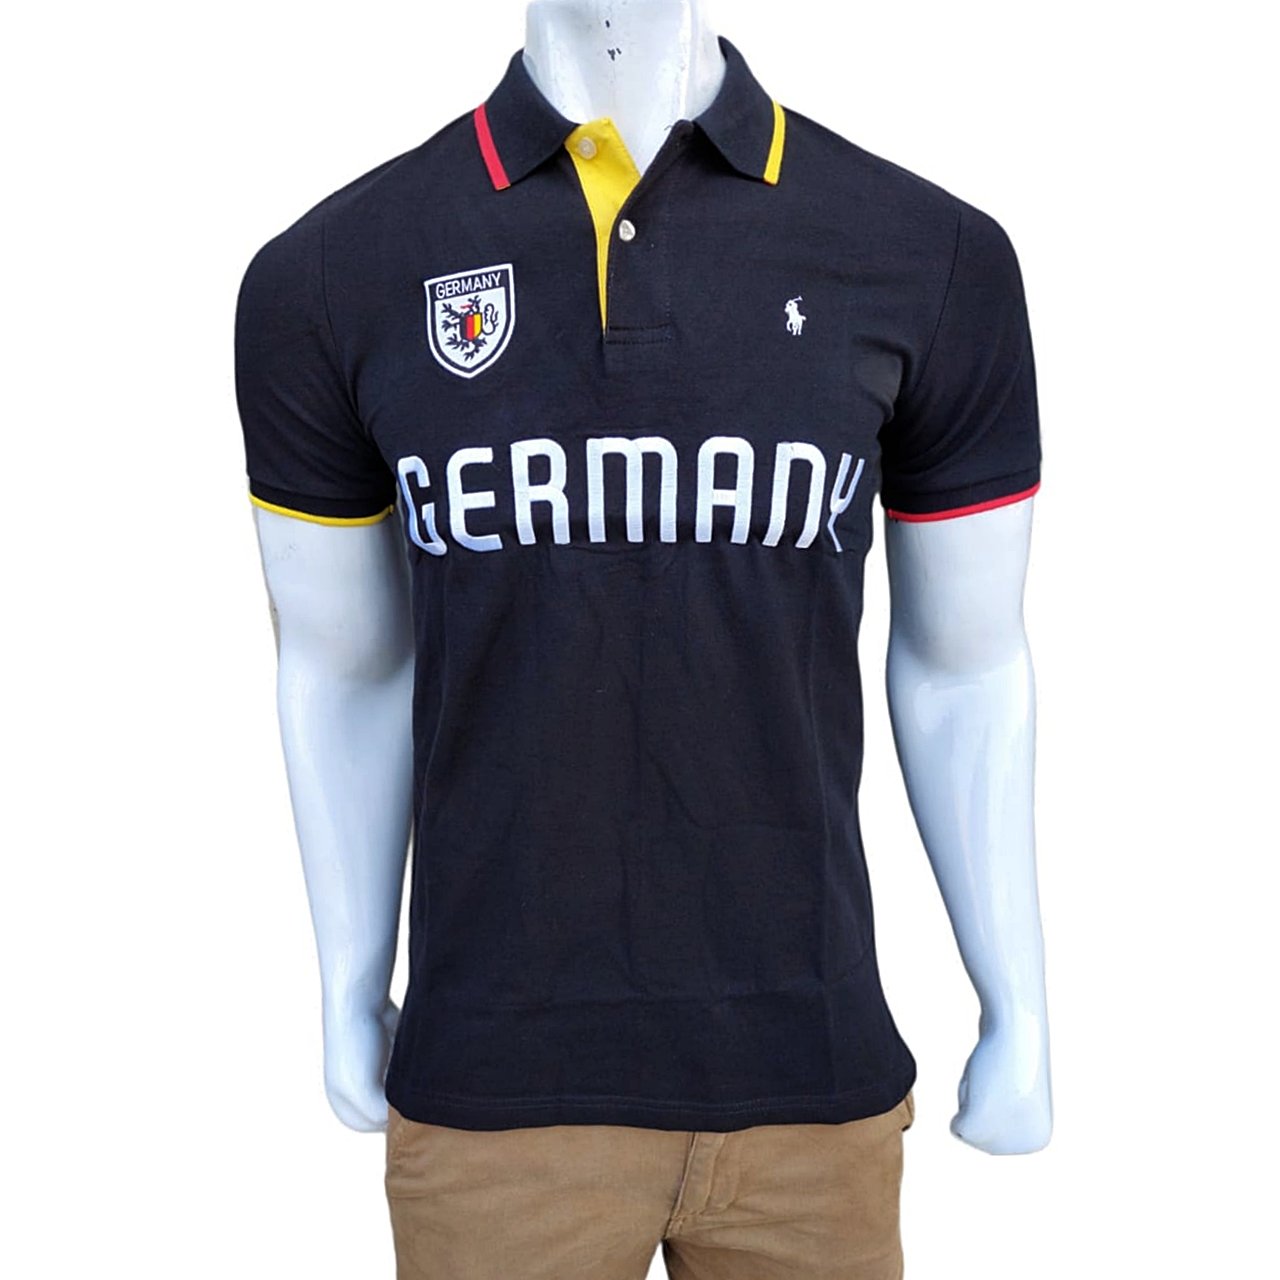 RL GERMANY exclusive polo shirt